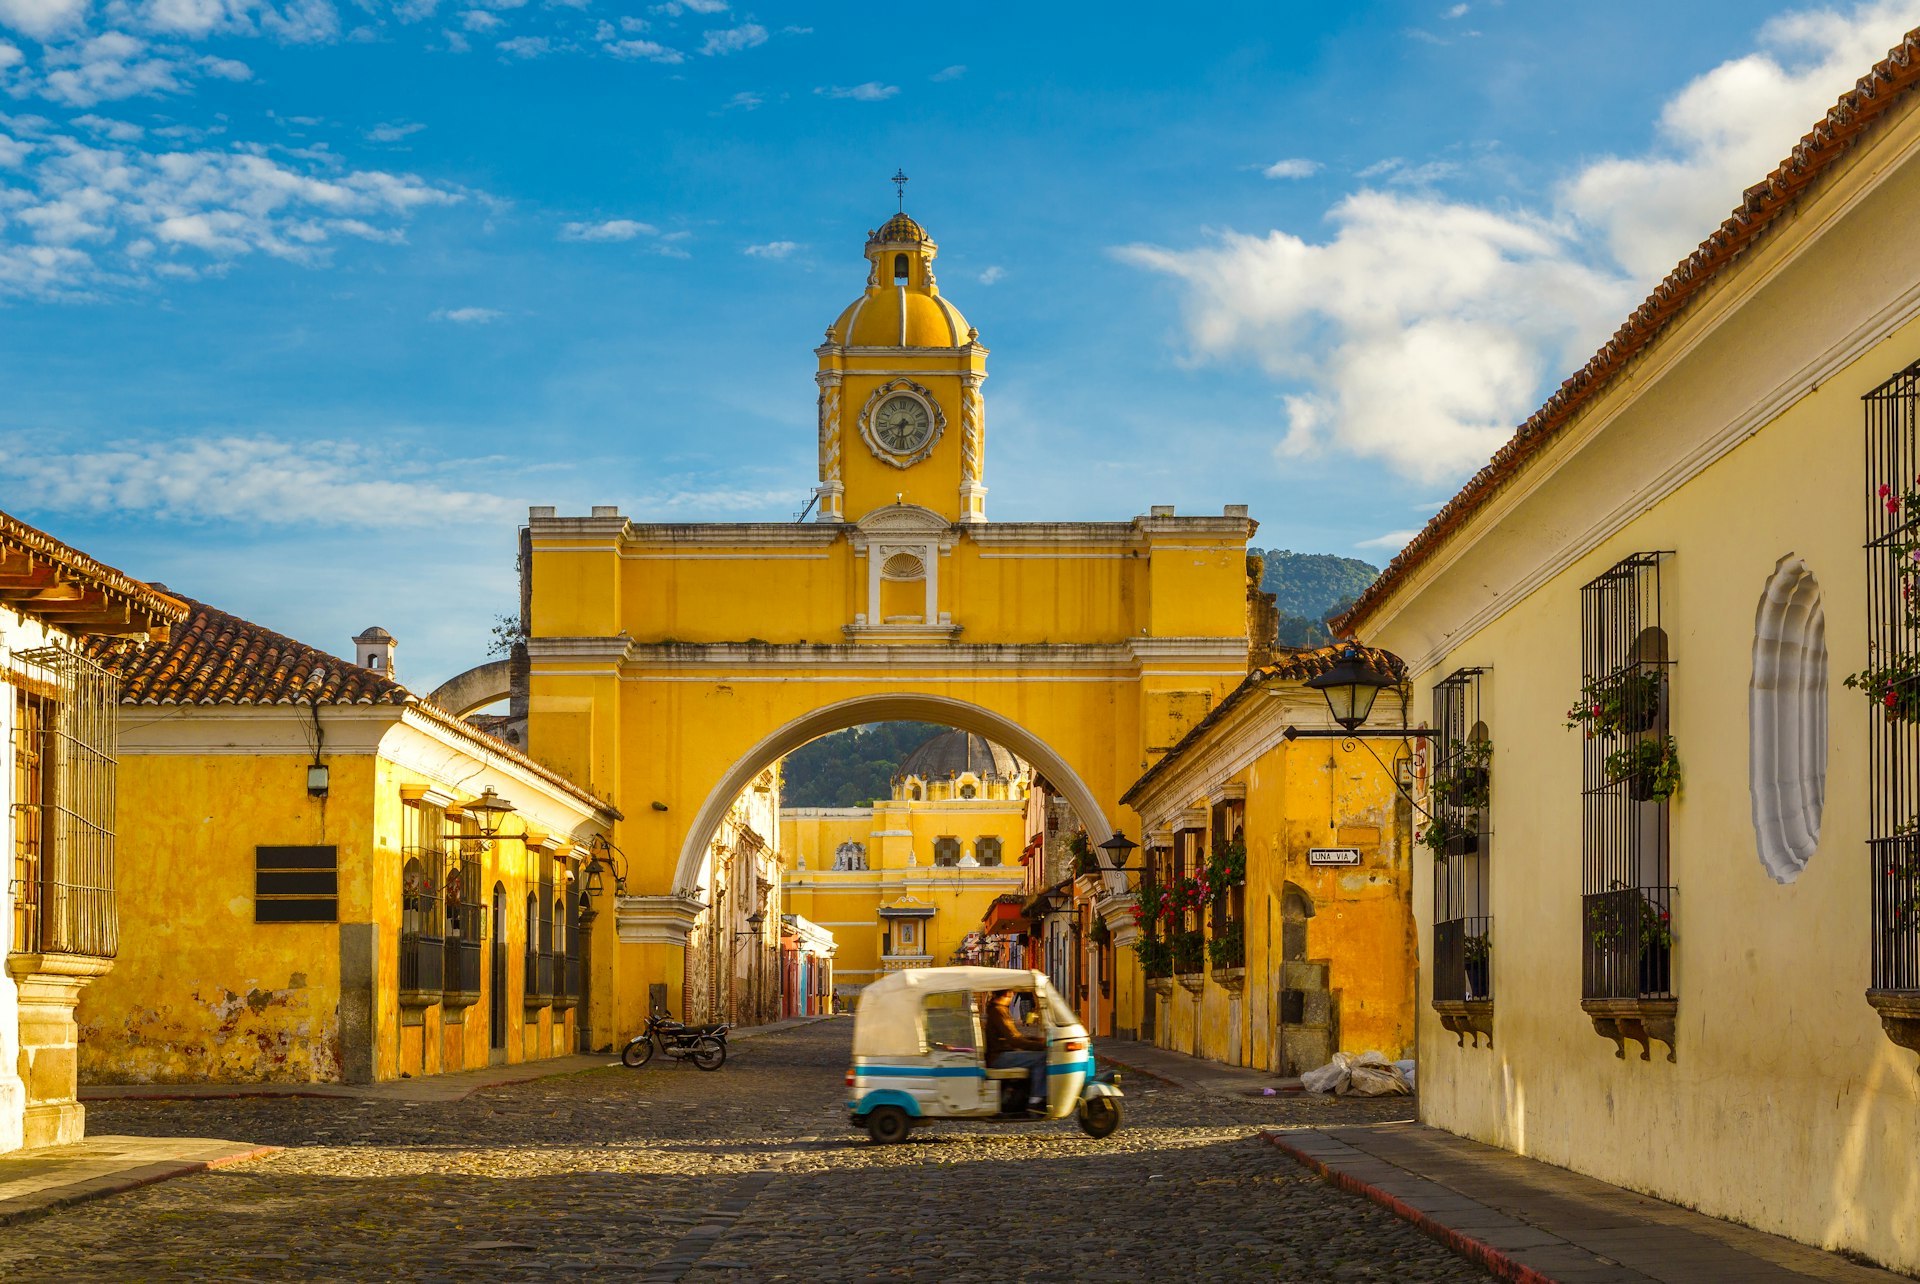 A tuk-tuk taxi passes the Arch of Santa Catalina in Antigua, Guatemala